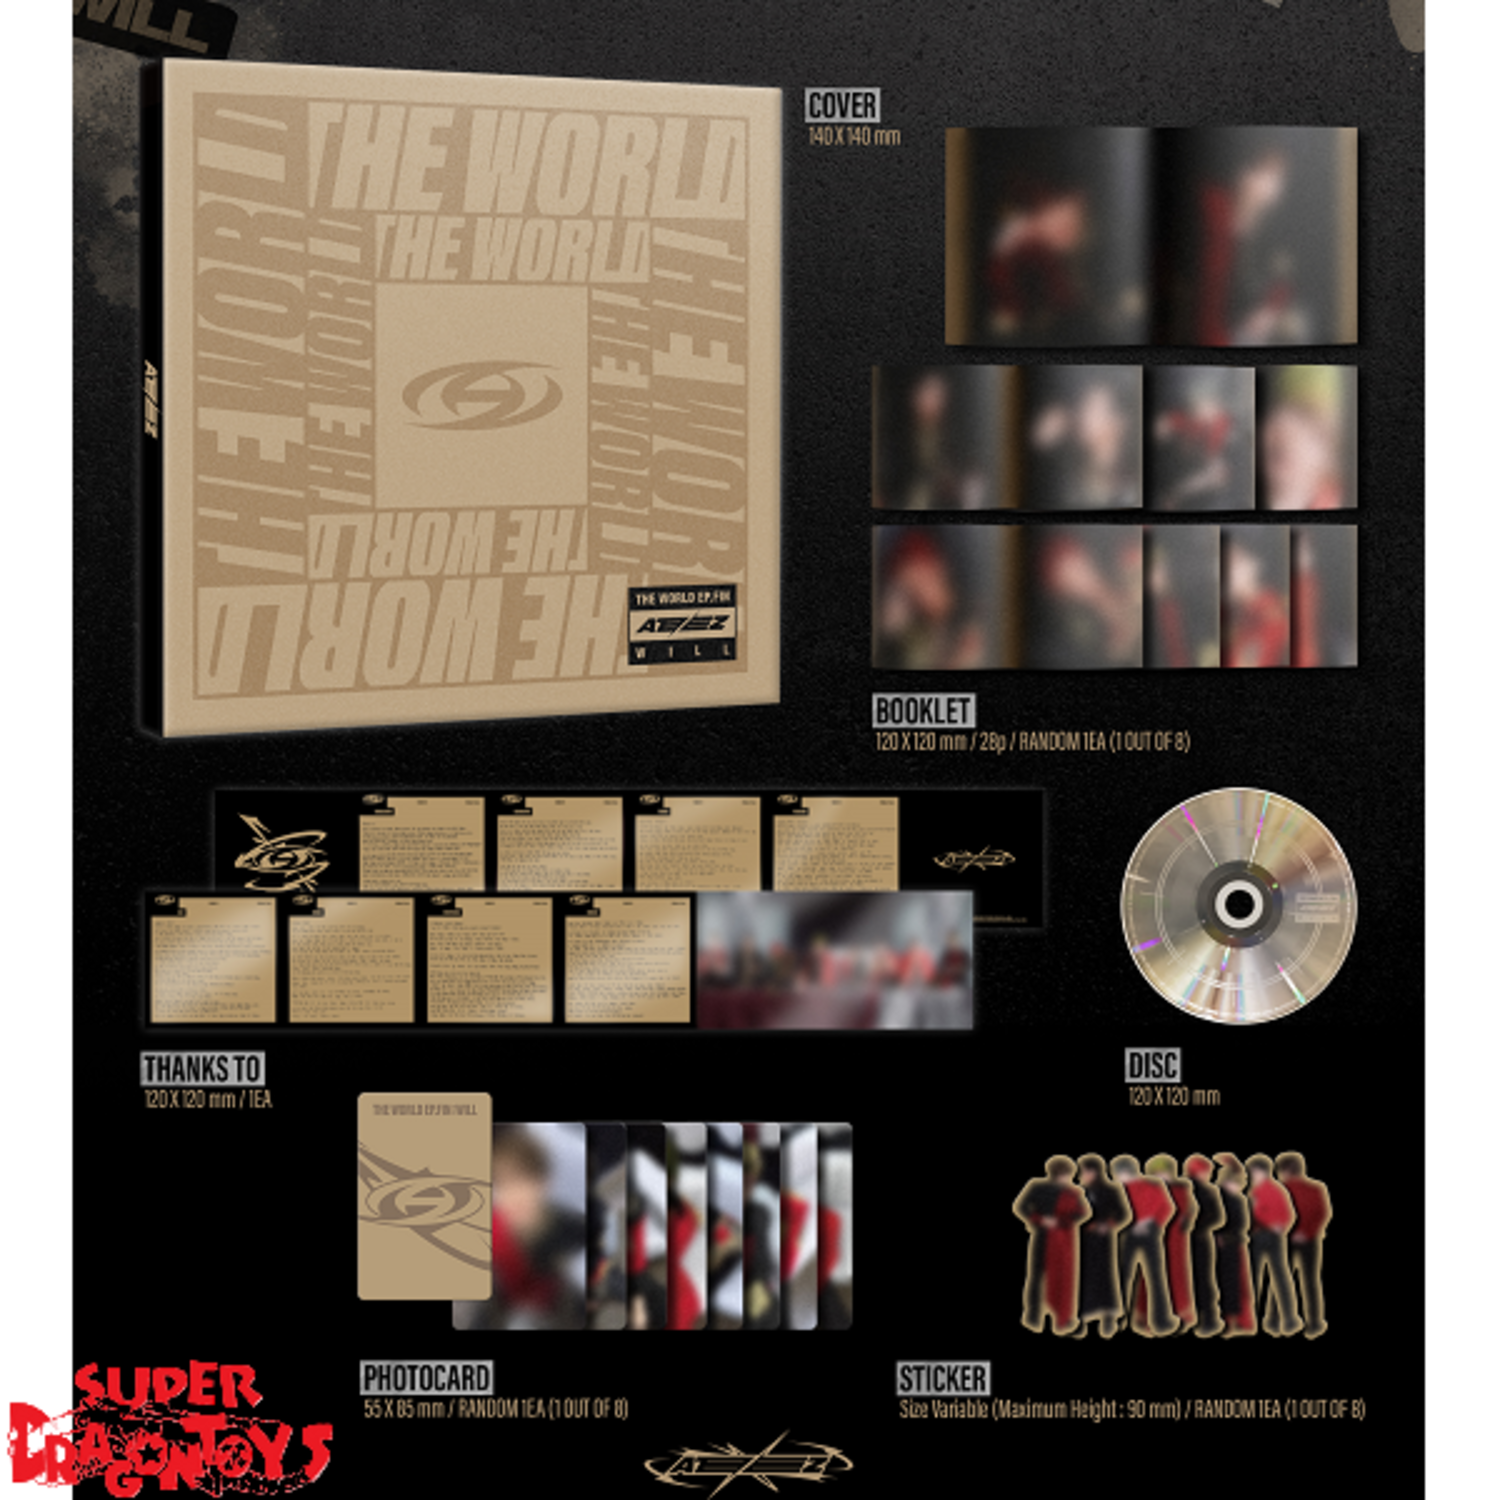 ATEEZ - 2nd Full Album [THE WORLD EP.FIN : WILL] (Digipak Random Ver.) +  Random Photocard (SW) - interAsia